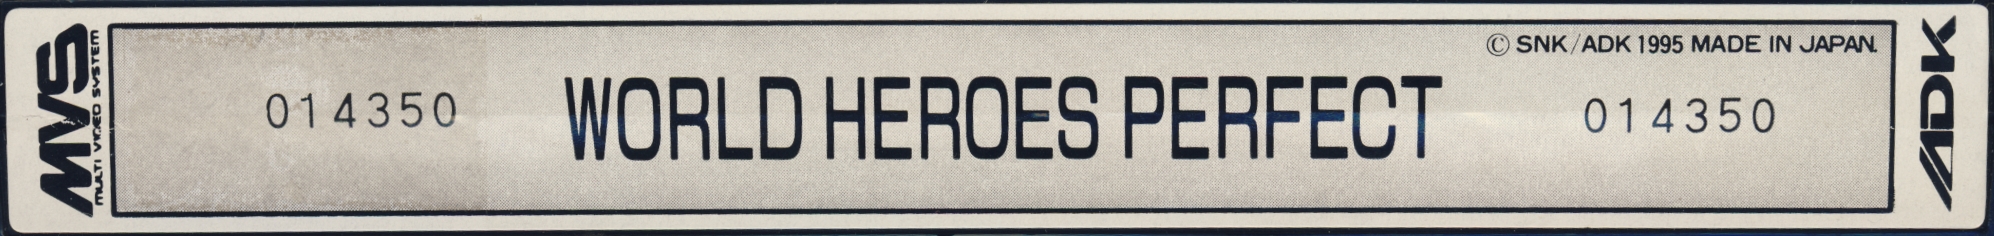 World heroes perfect us label.jpg